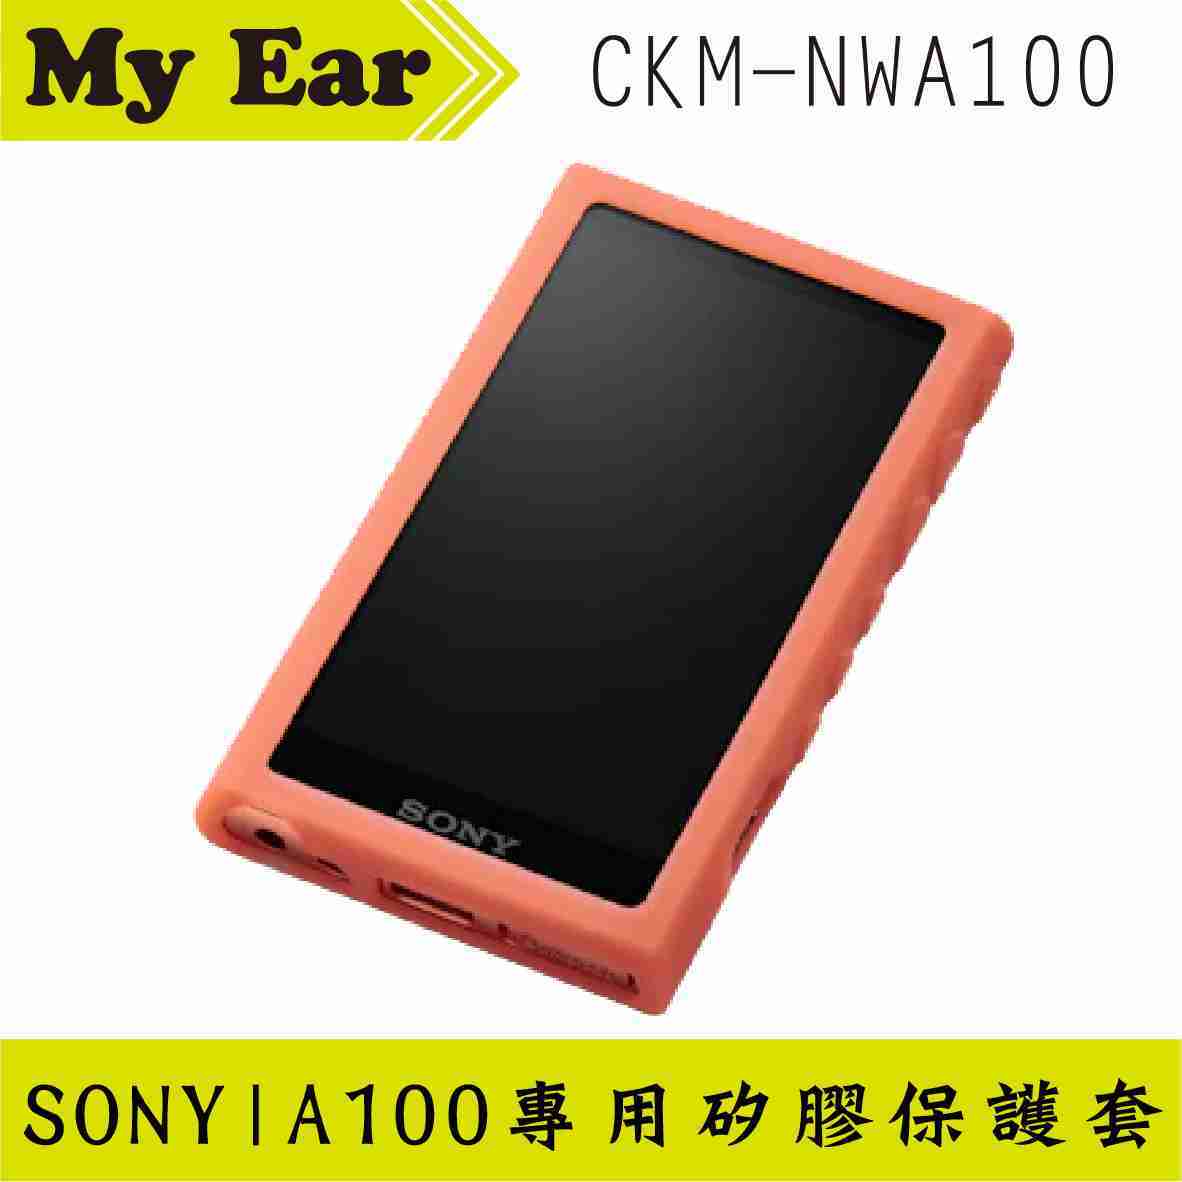 SONY 索尼 CKM-NWA100 多色可選 Walkman® 專用矽膠保護殼 | My Ear 耳機專門店